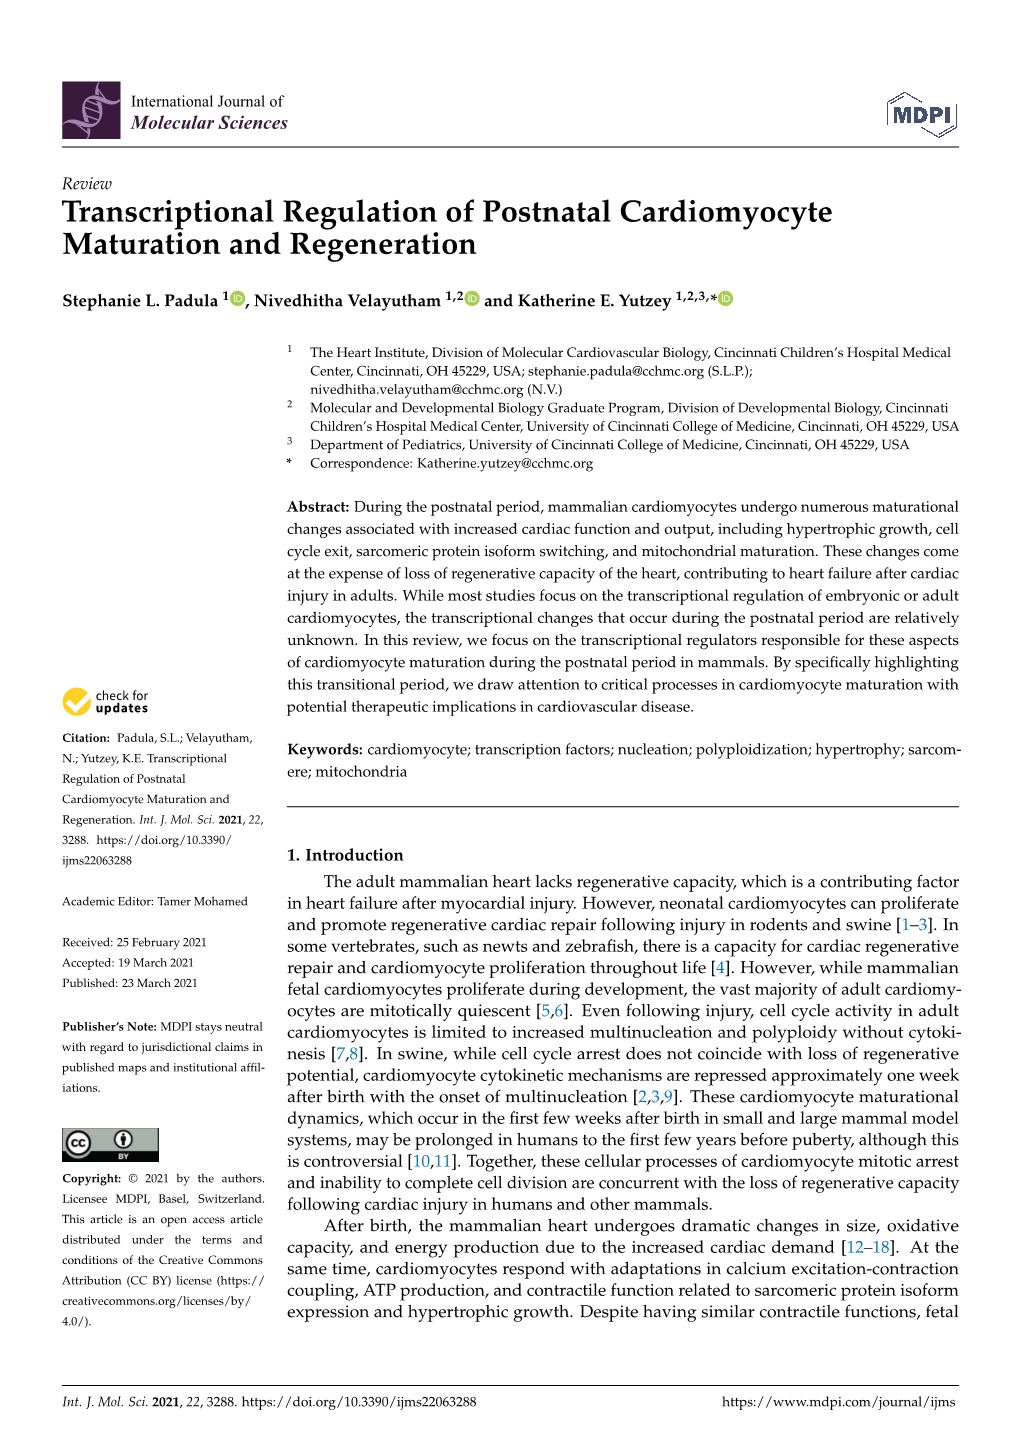 Transcriptional Regulation of Postnatal Cardiomyocyte Maturation and Regeneration